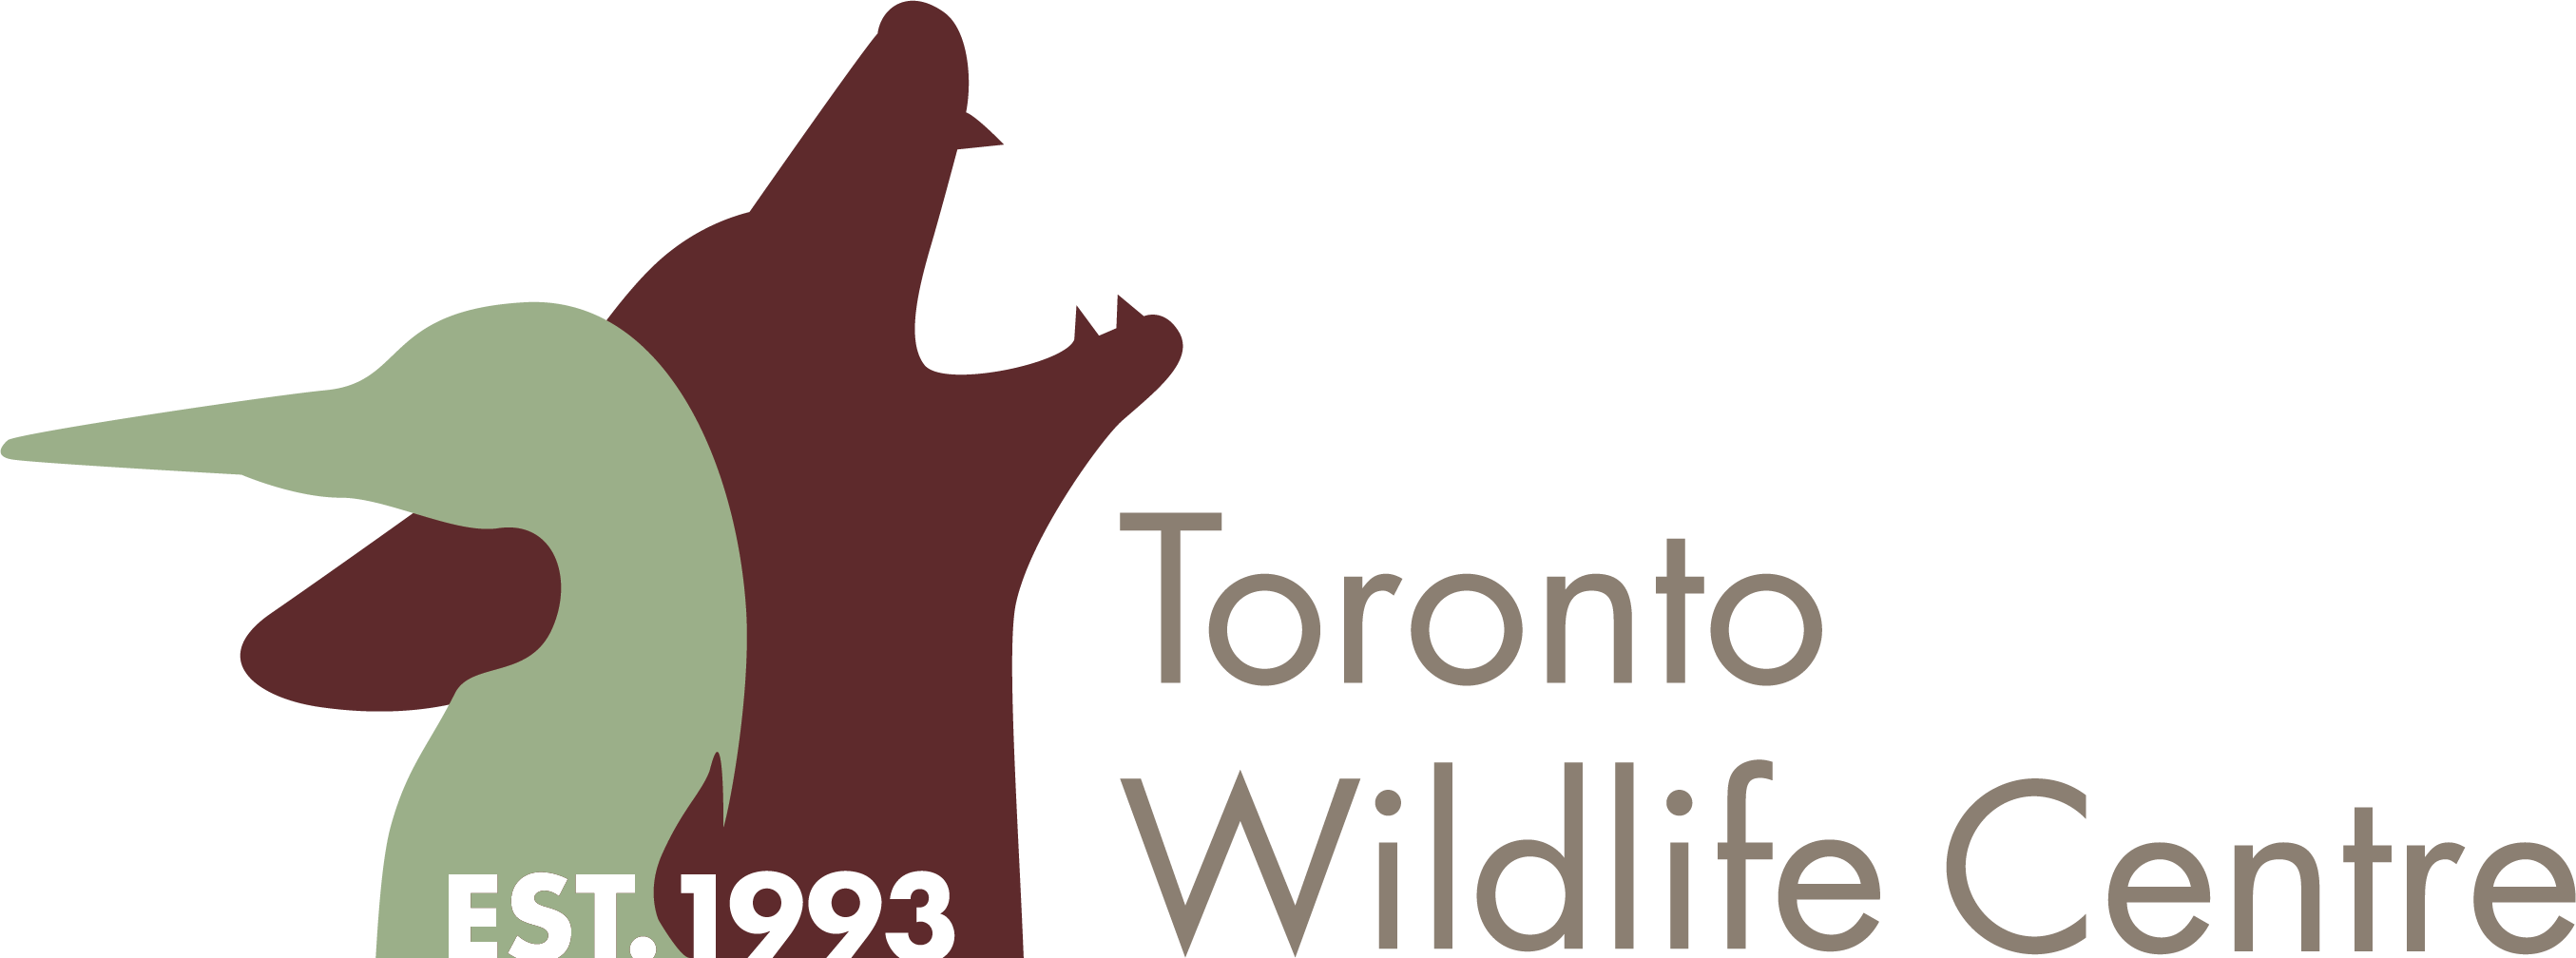 Toronto Wild Life Centre